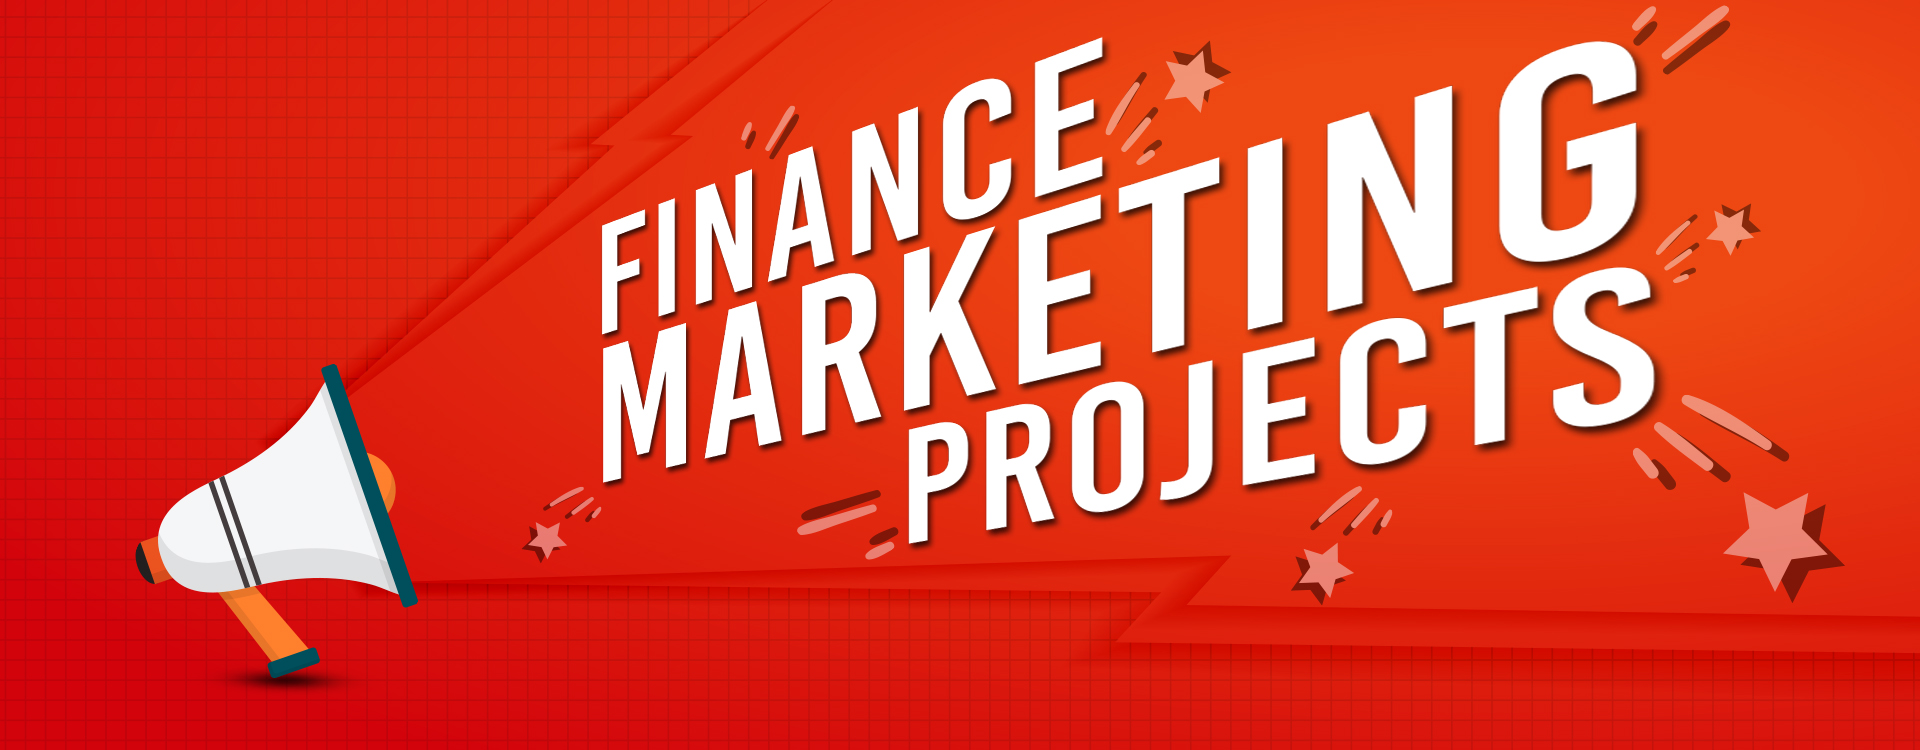 Finance Marketing Projects